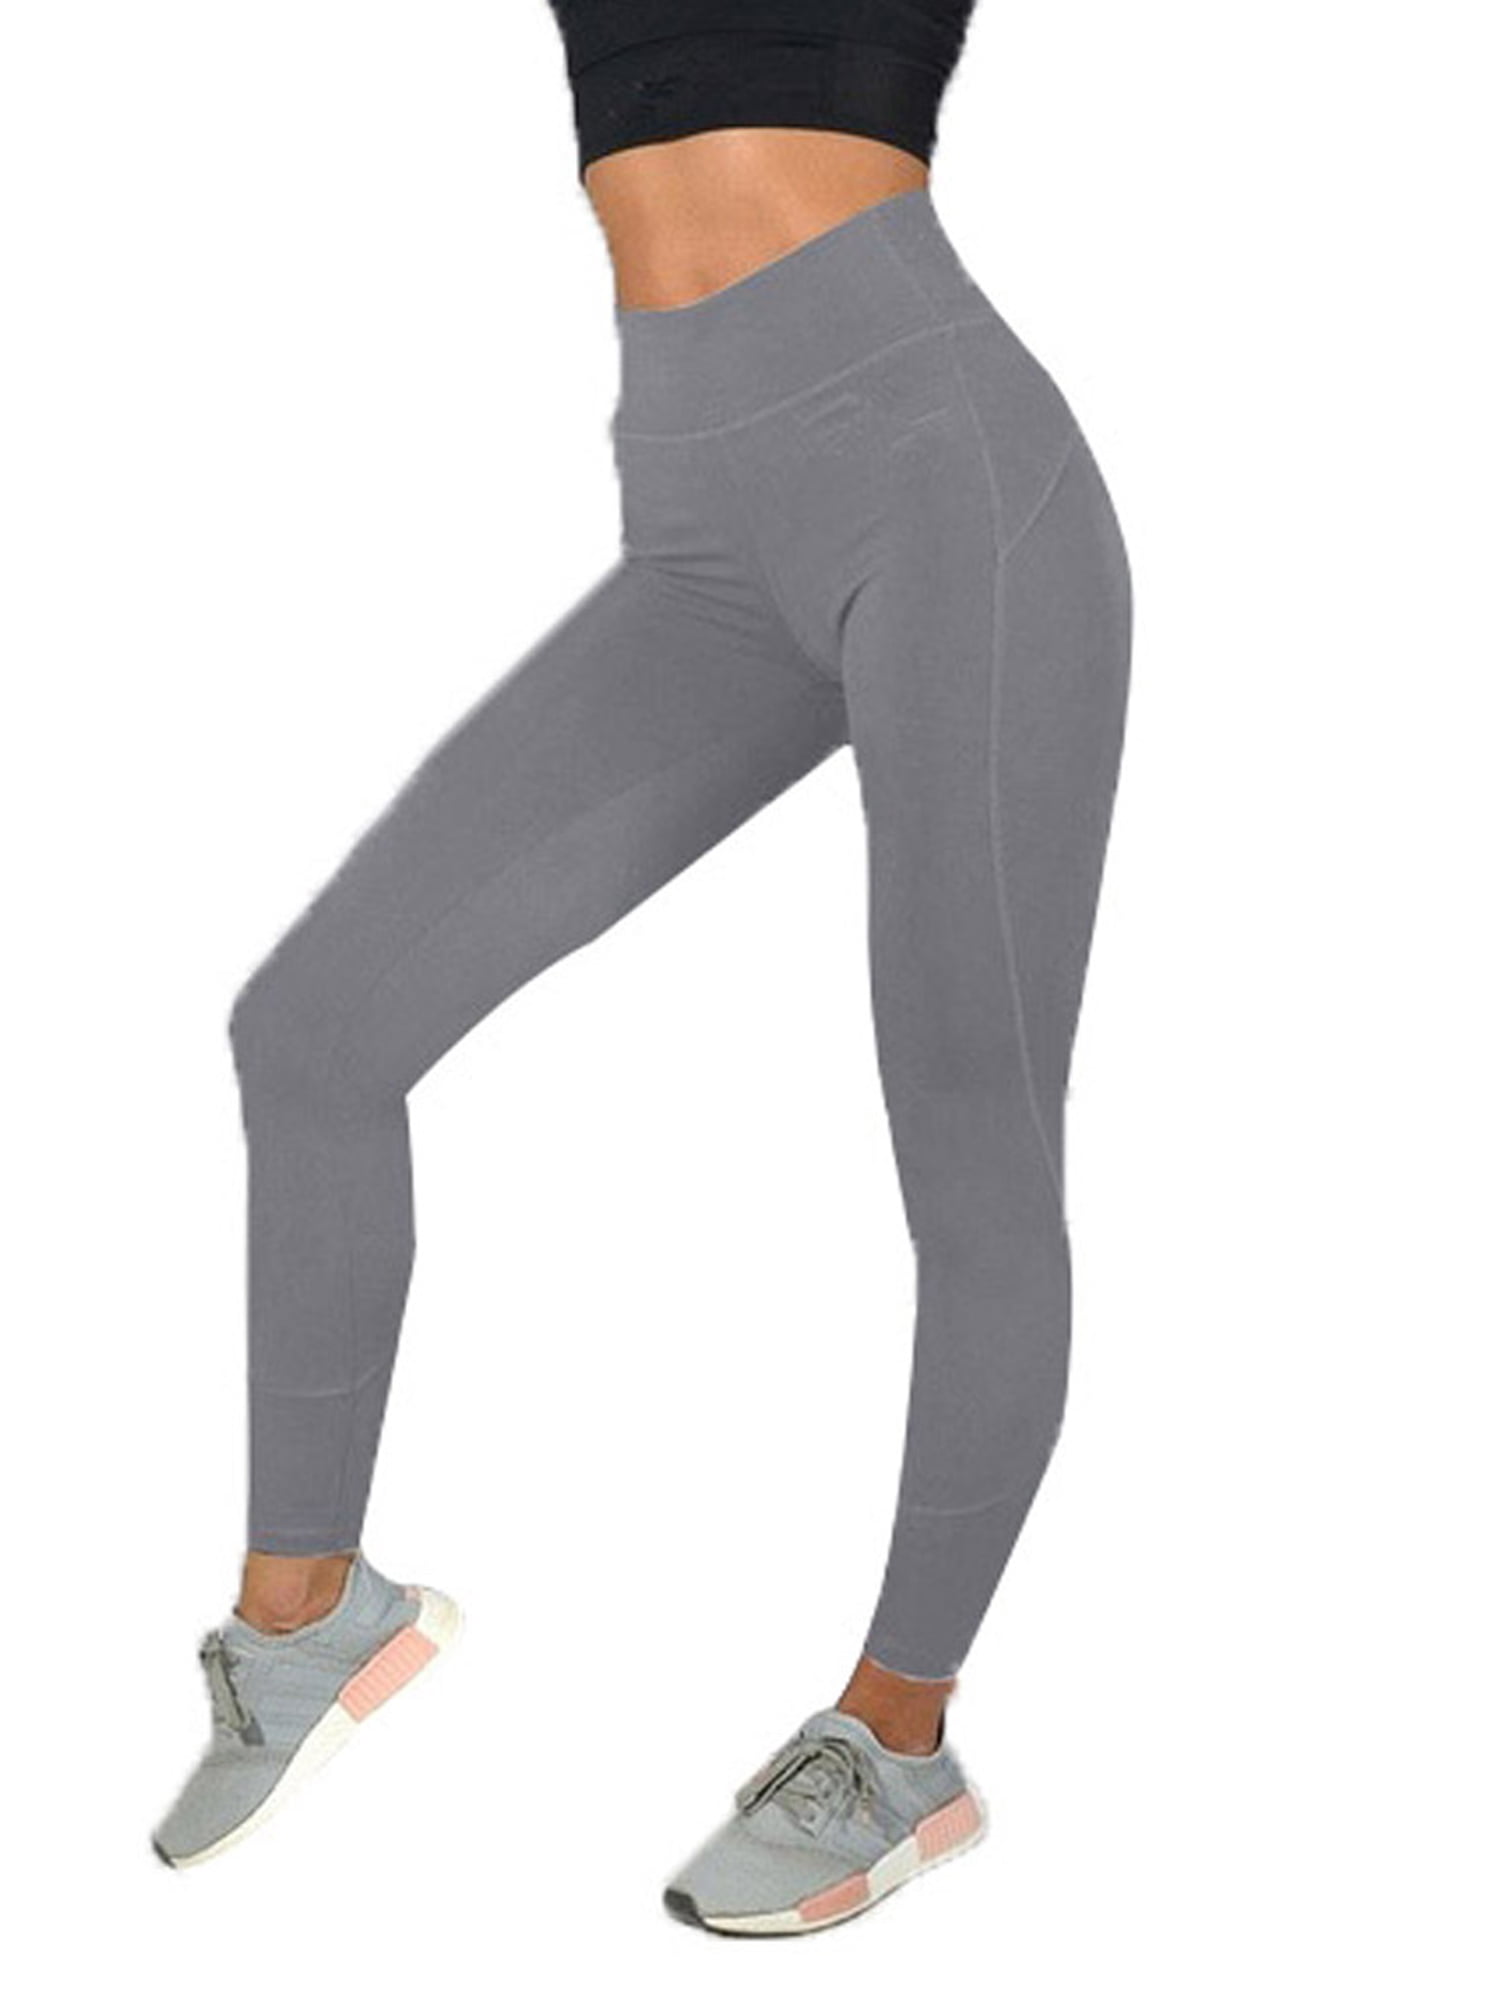 Details about   Women Yoga Push Up Sports Gym Fitness Leggings Elastic Pants